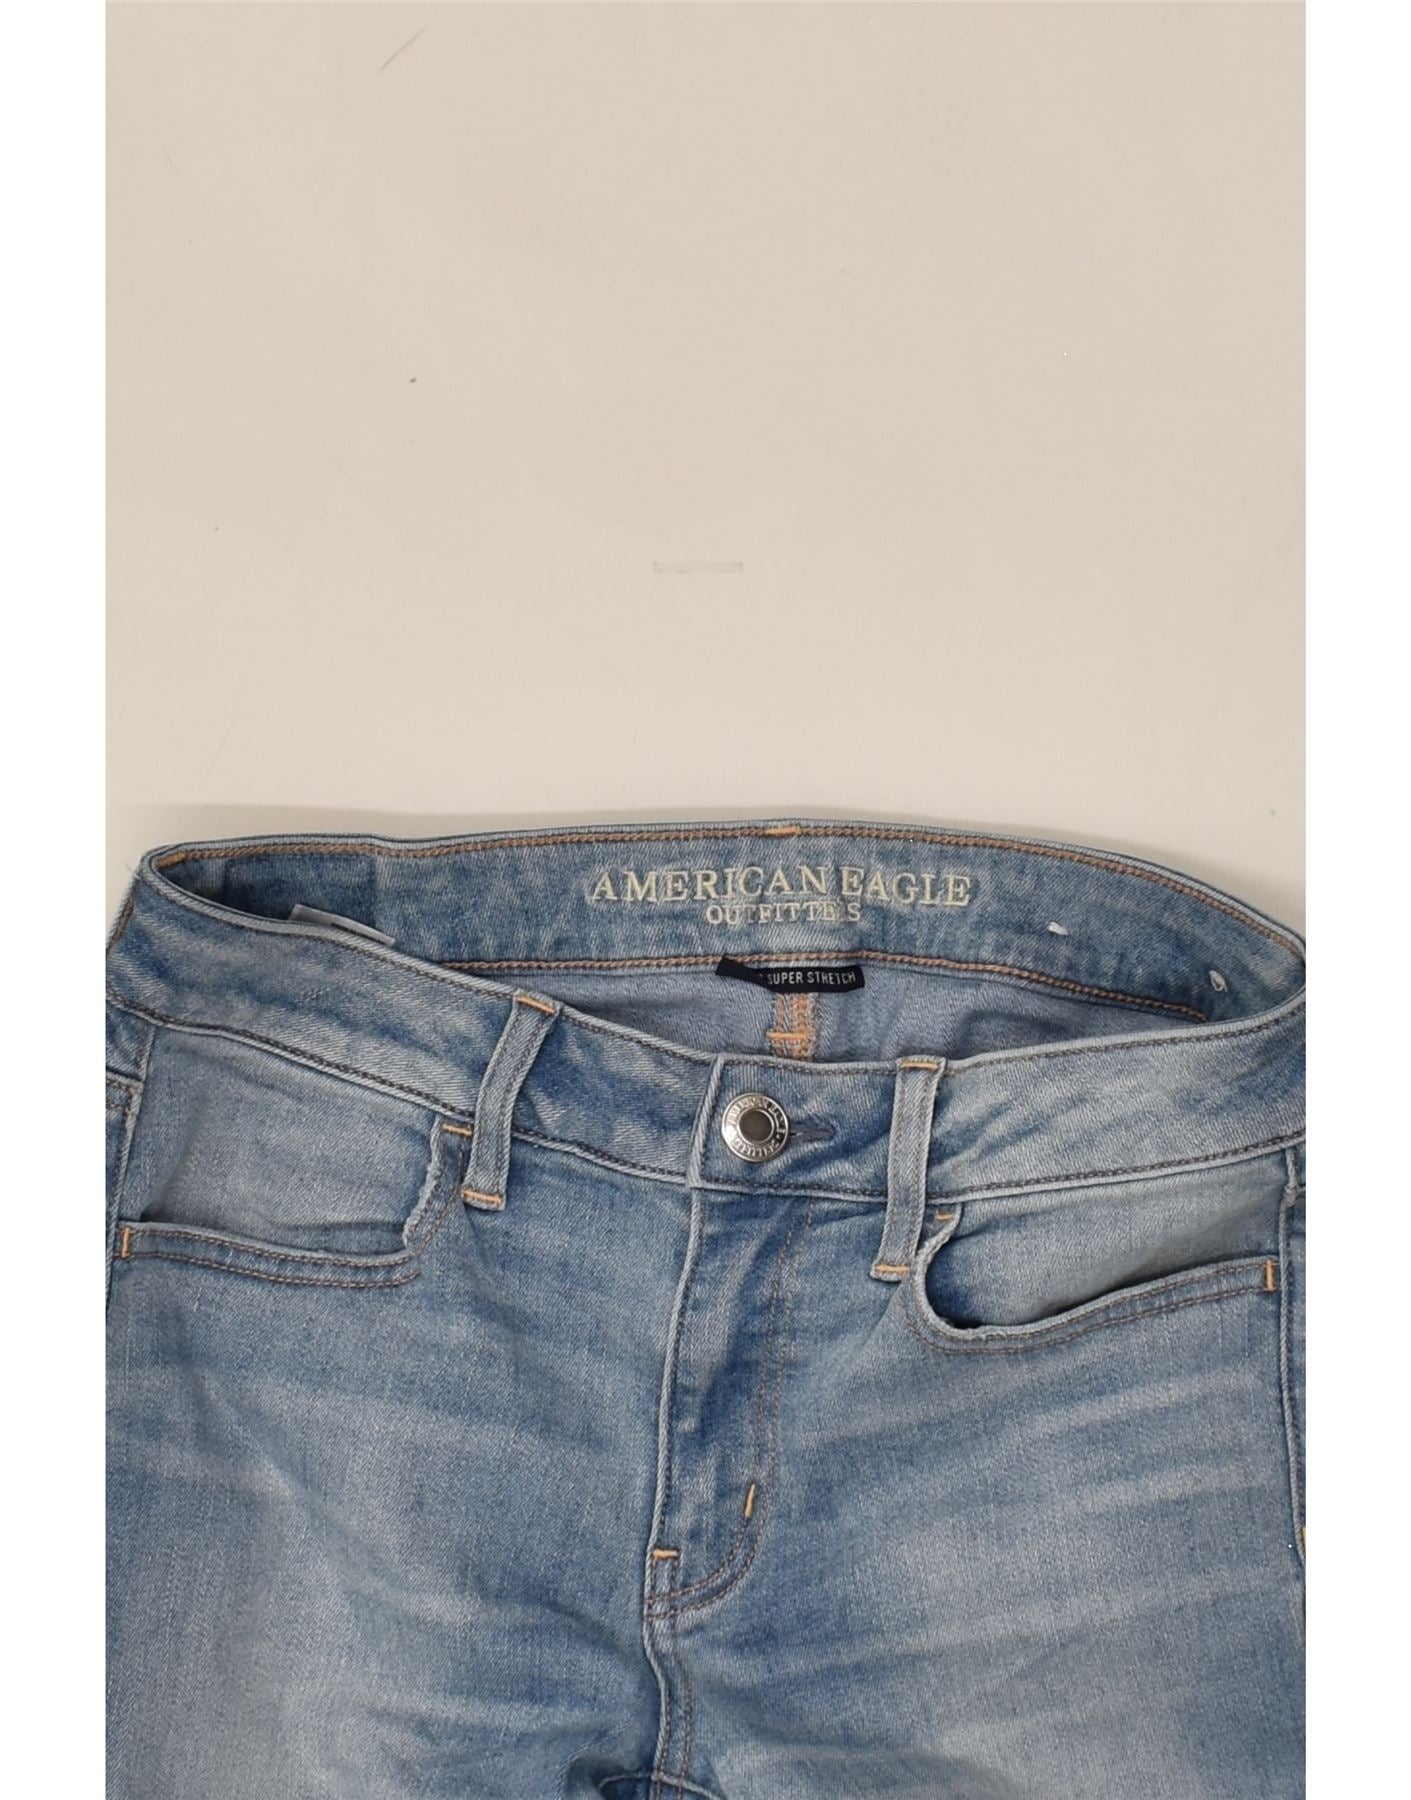 AMERICAN EAGLE Womens Jegging Jeans US 8 Medium W29 L28 Blue